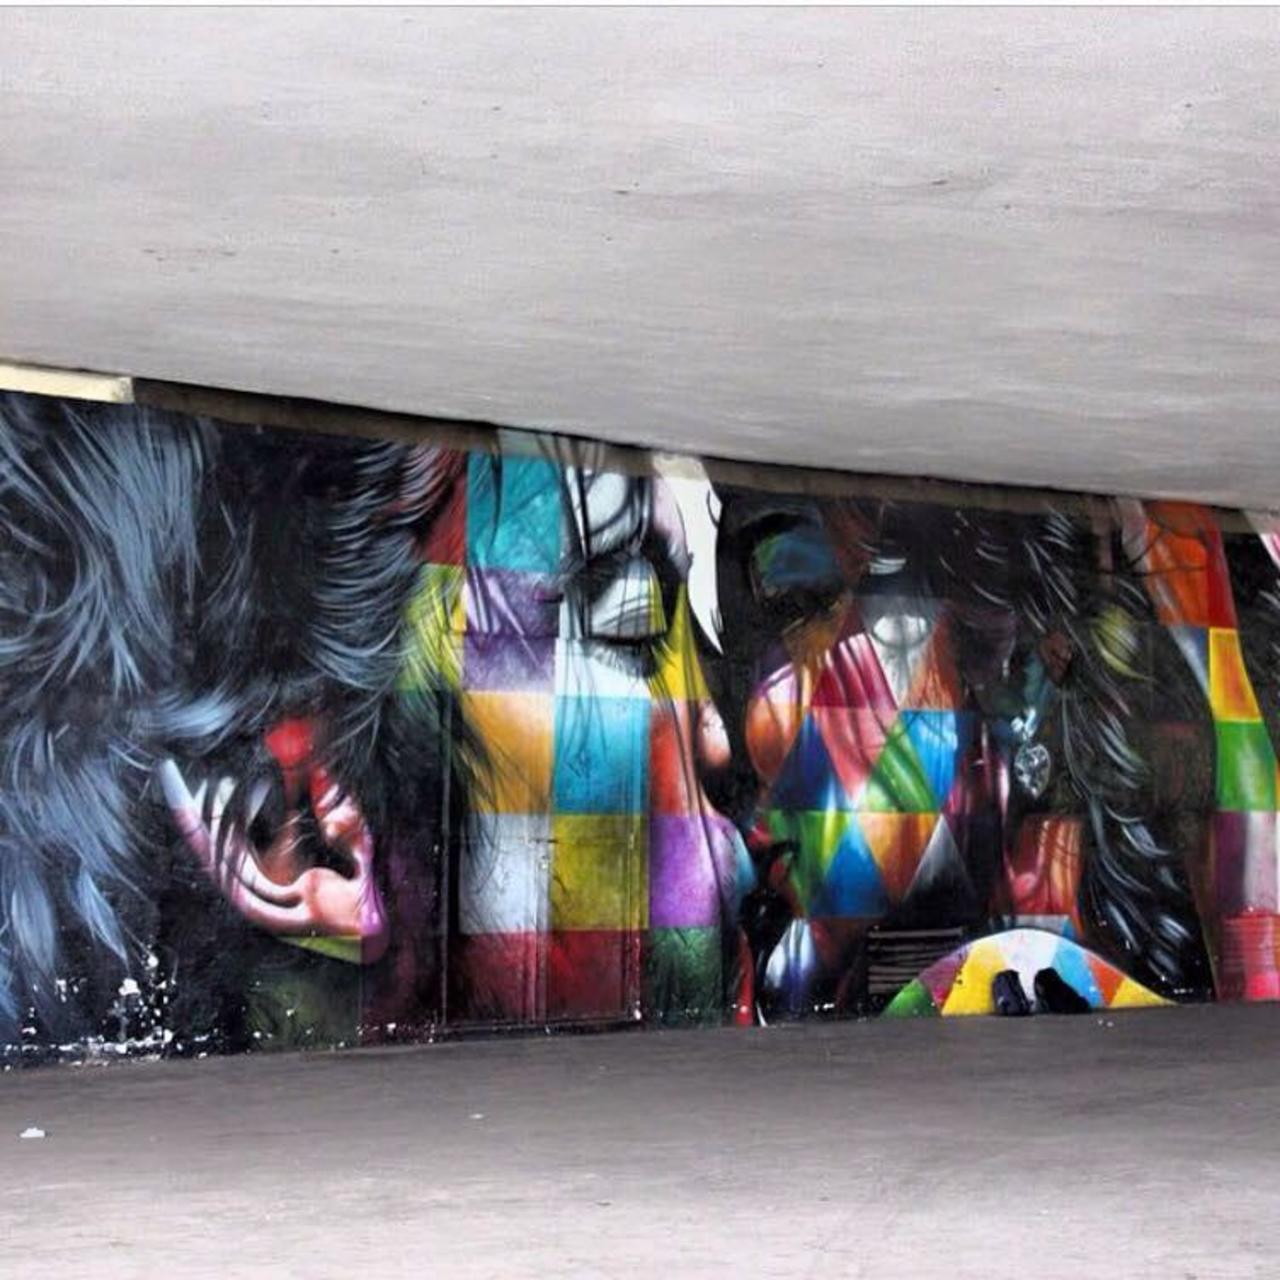 New Street Art by the brilliant Eduardo Kobra 

#art #mural #graffiti #streetart http://t.co/wNAOraEBY8